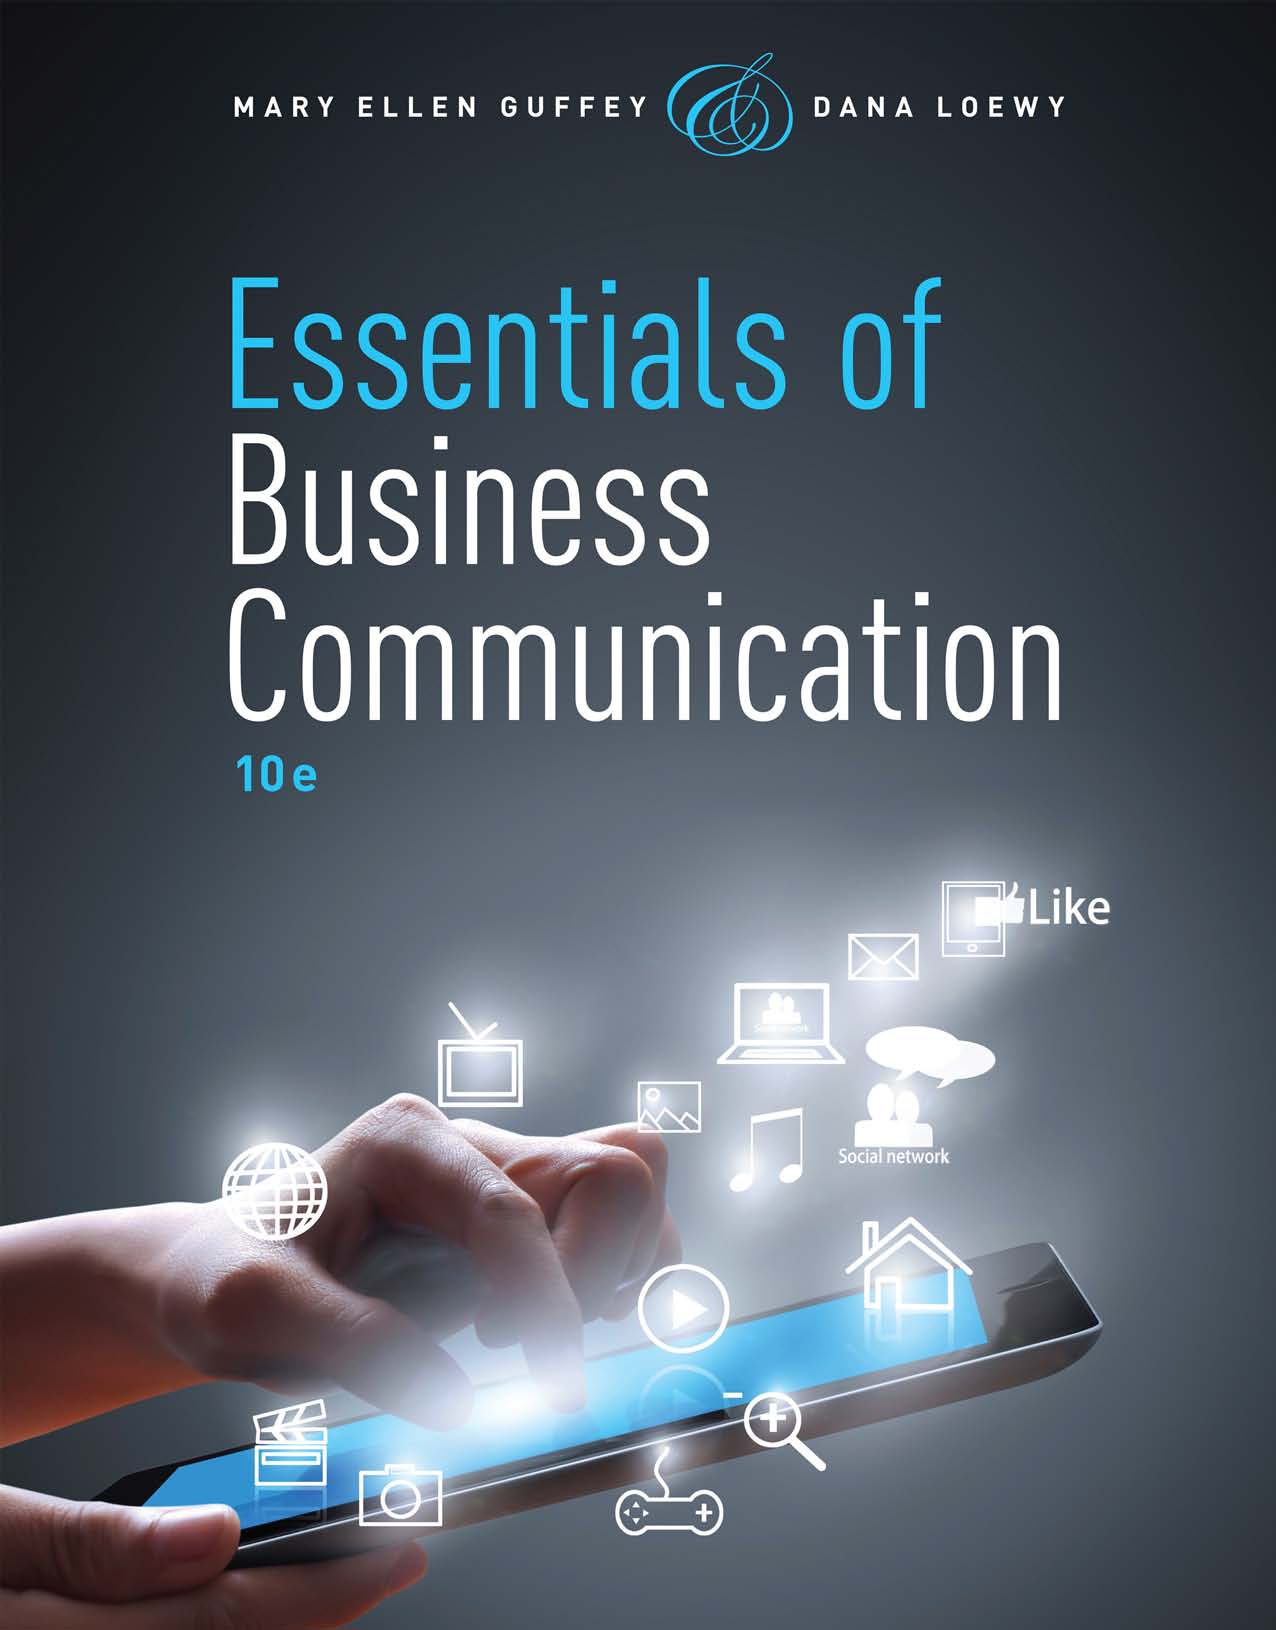 Essentials+of+Business+Communication+10e+-+Mary+Ellen+Guffey.pdf